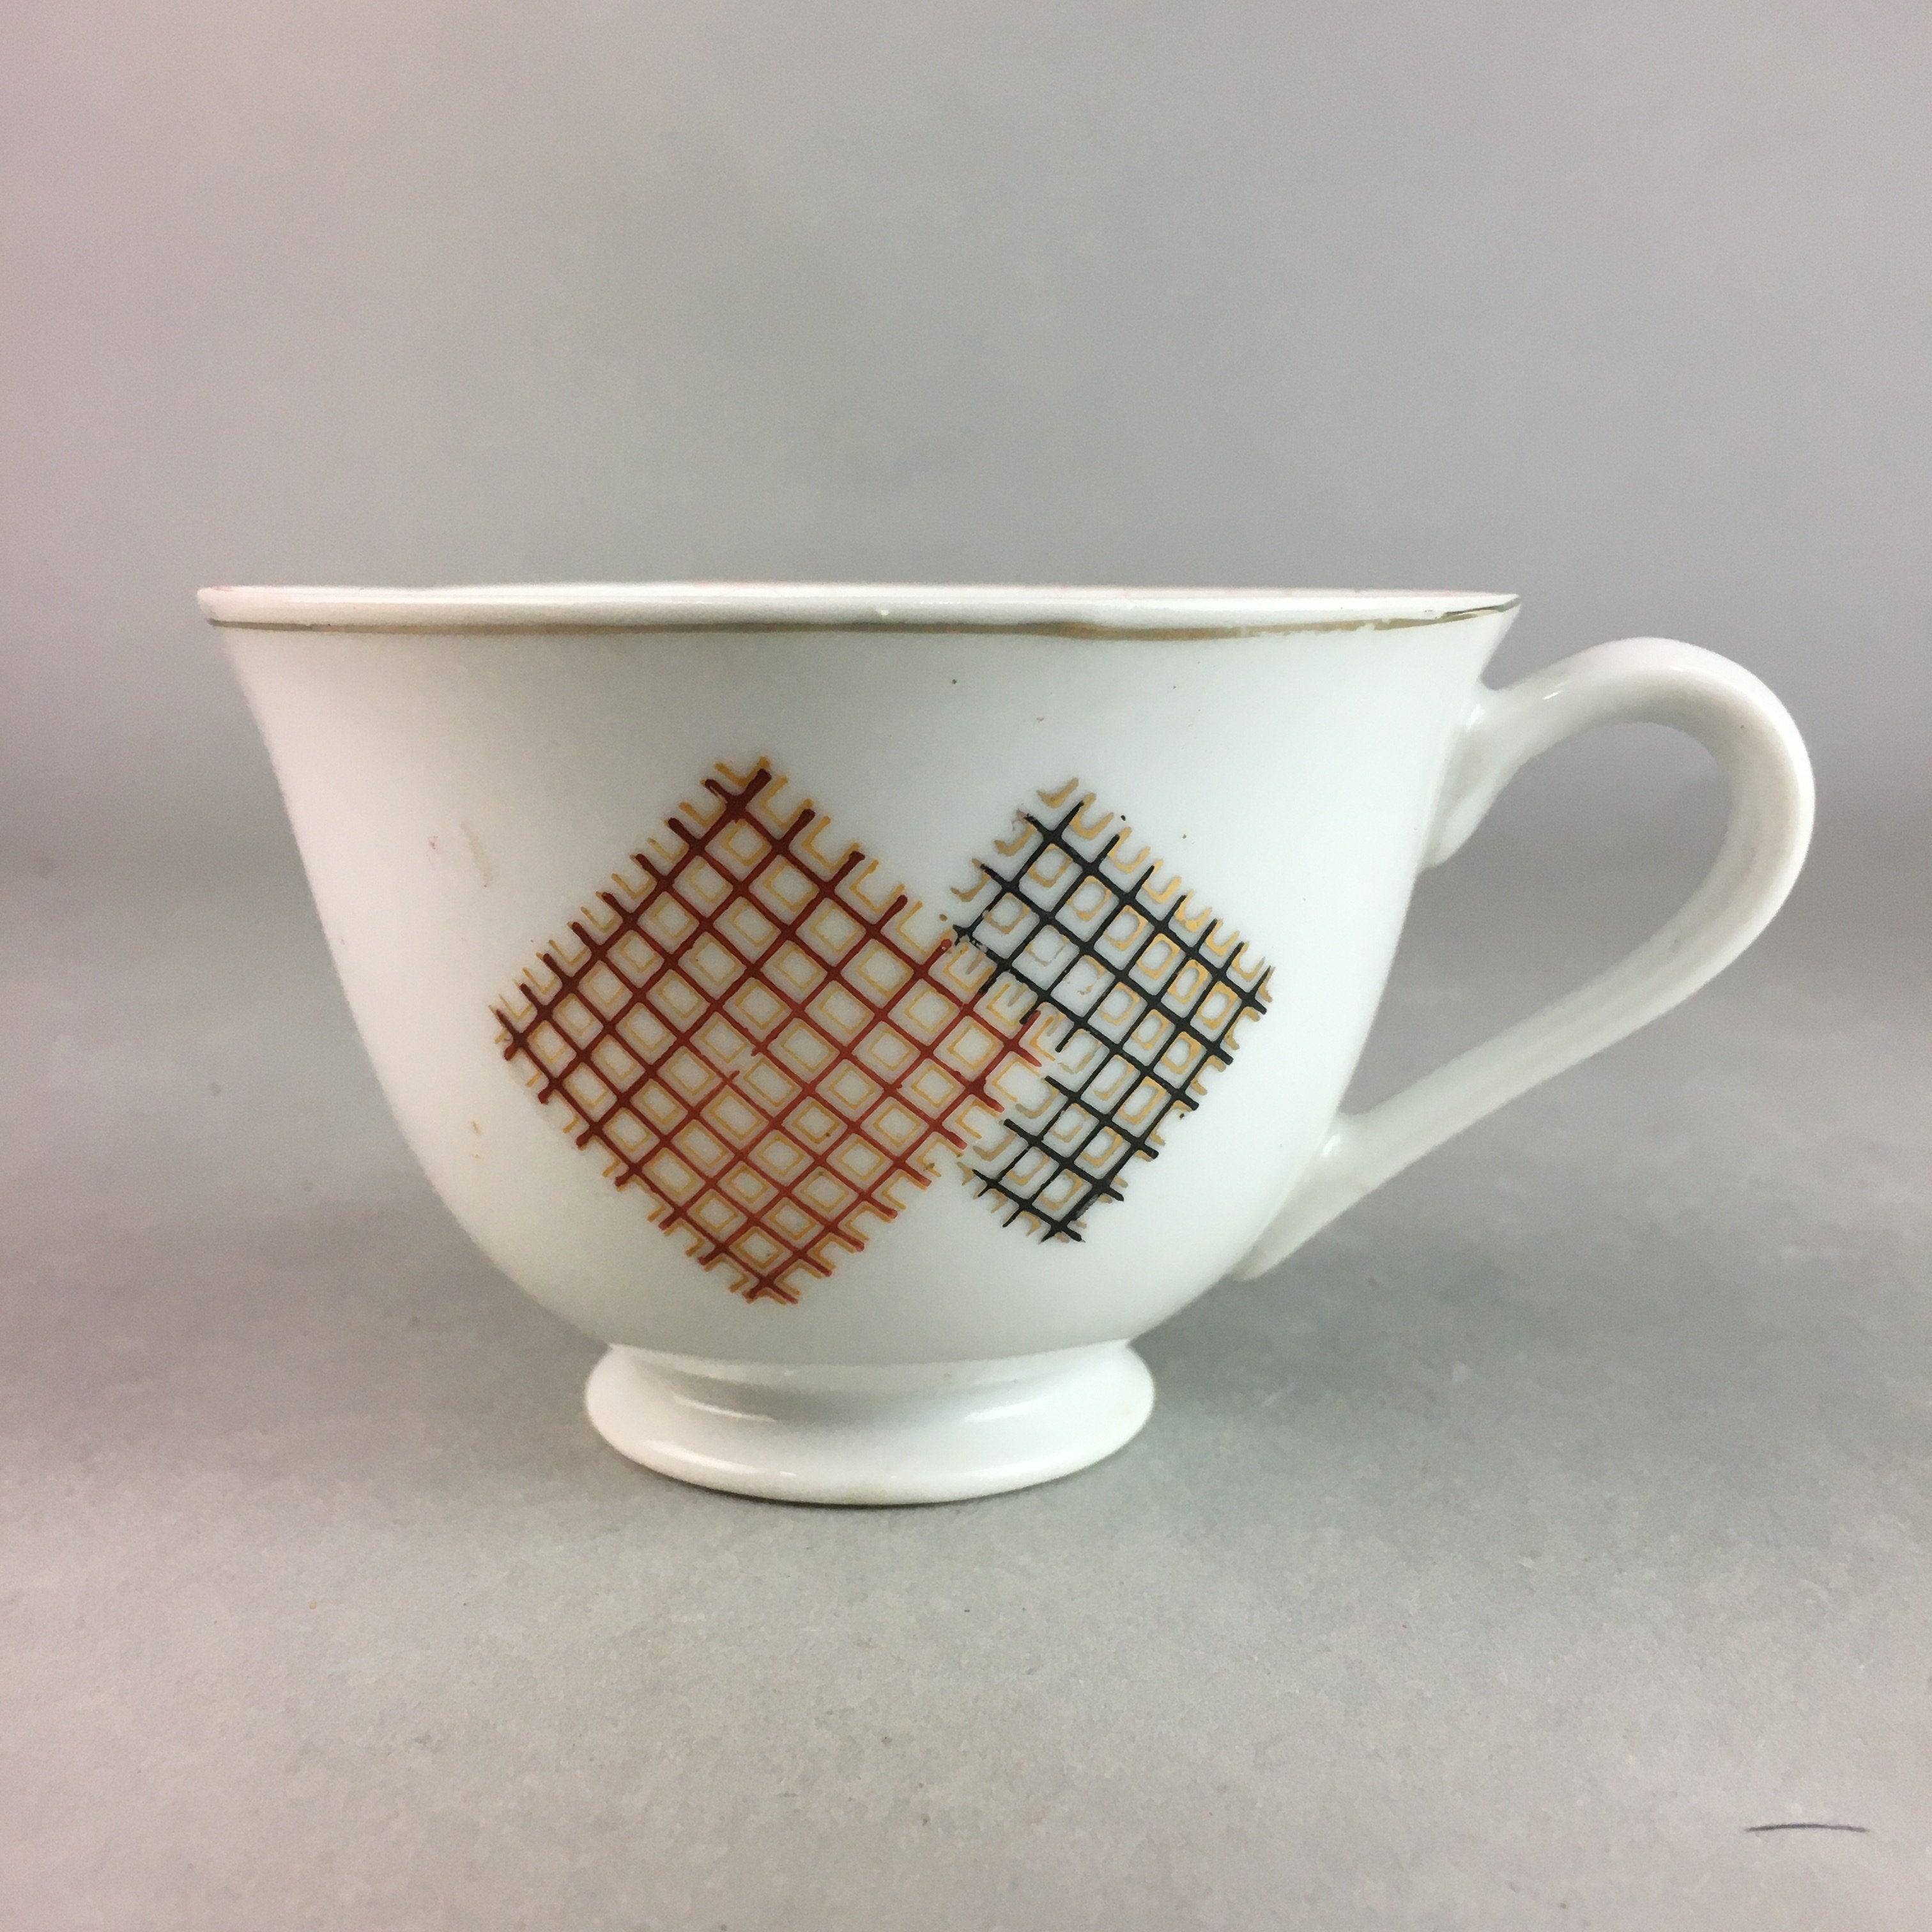 Japanese Porcelain Teacup Mug Saucer Vtg Yunomi Plate Set Plaid PP315